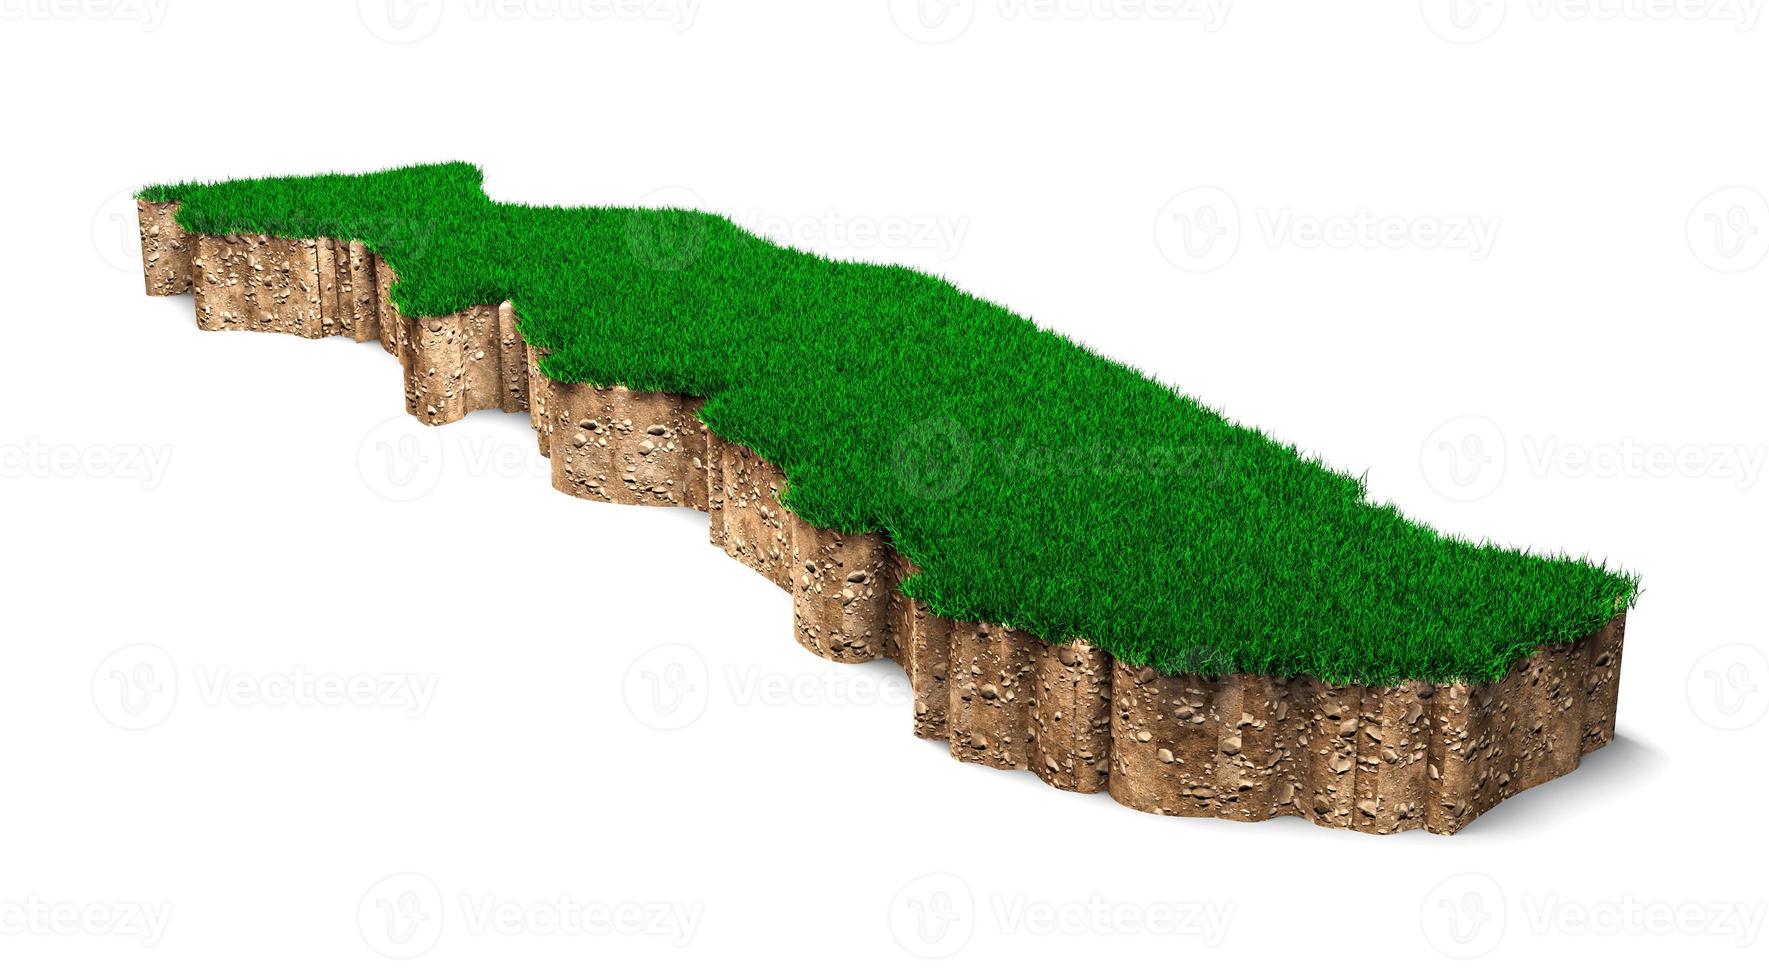 togo karte boden land geologie querschnitt mit grünem gras und felsen bodentextur 3d illustration foto